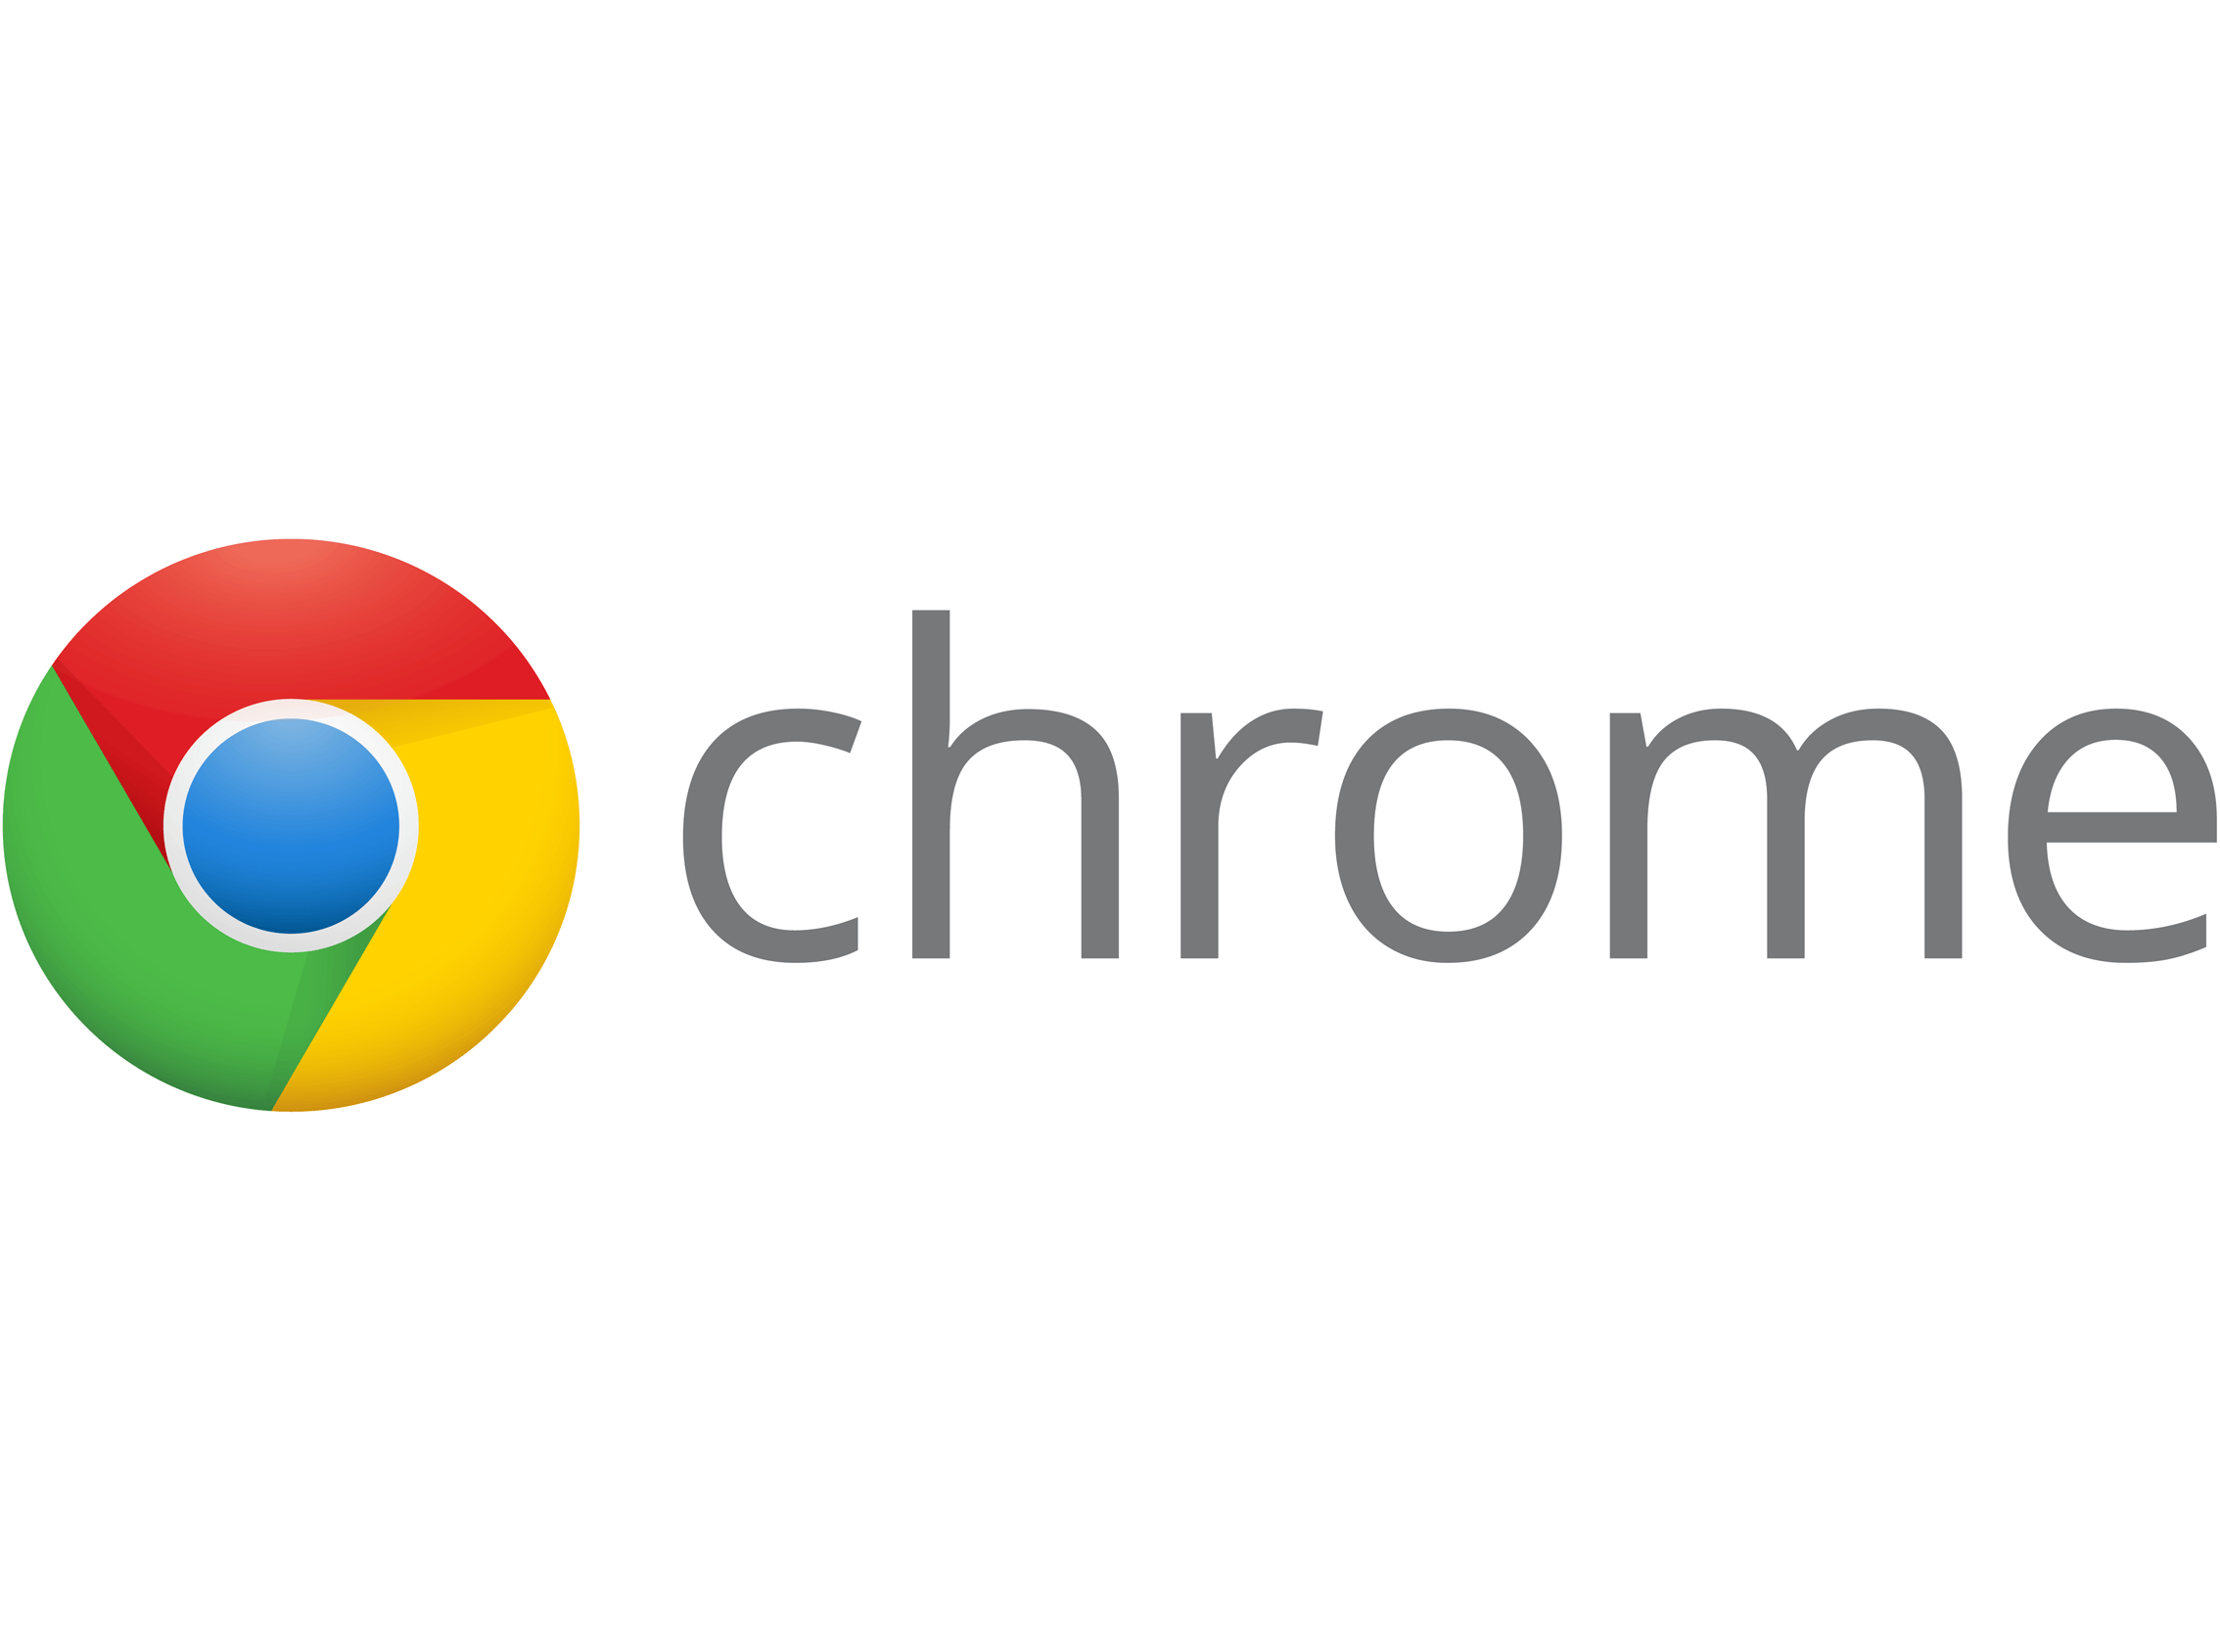 Official Google Chrome Logo - Microsoft removes Google Chrome app from Windows 10 Store